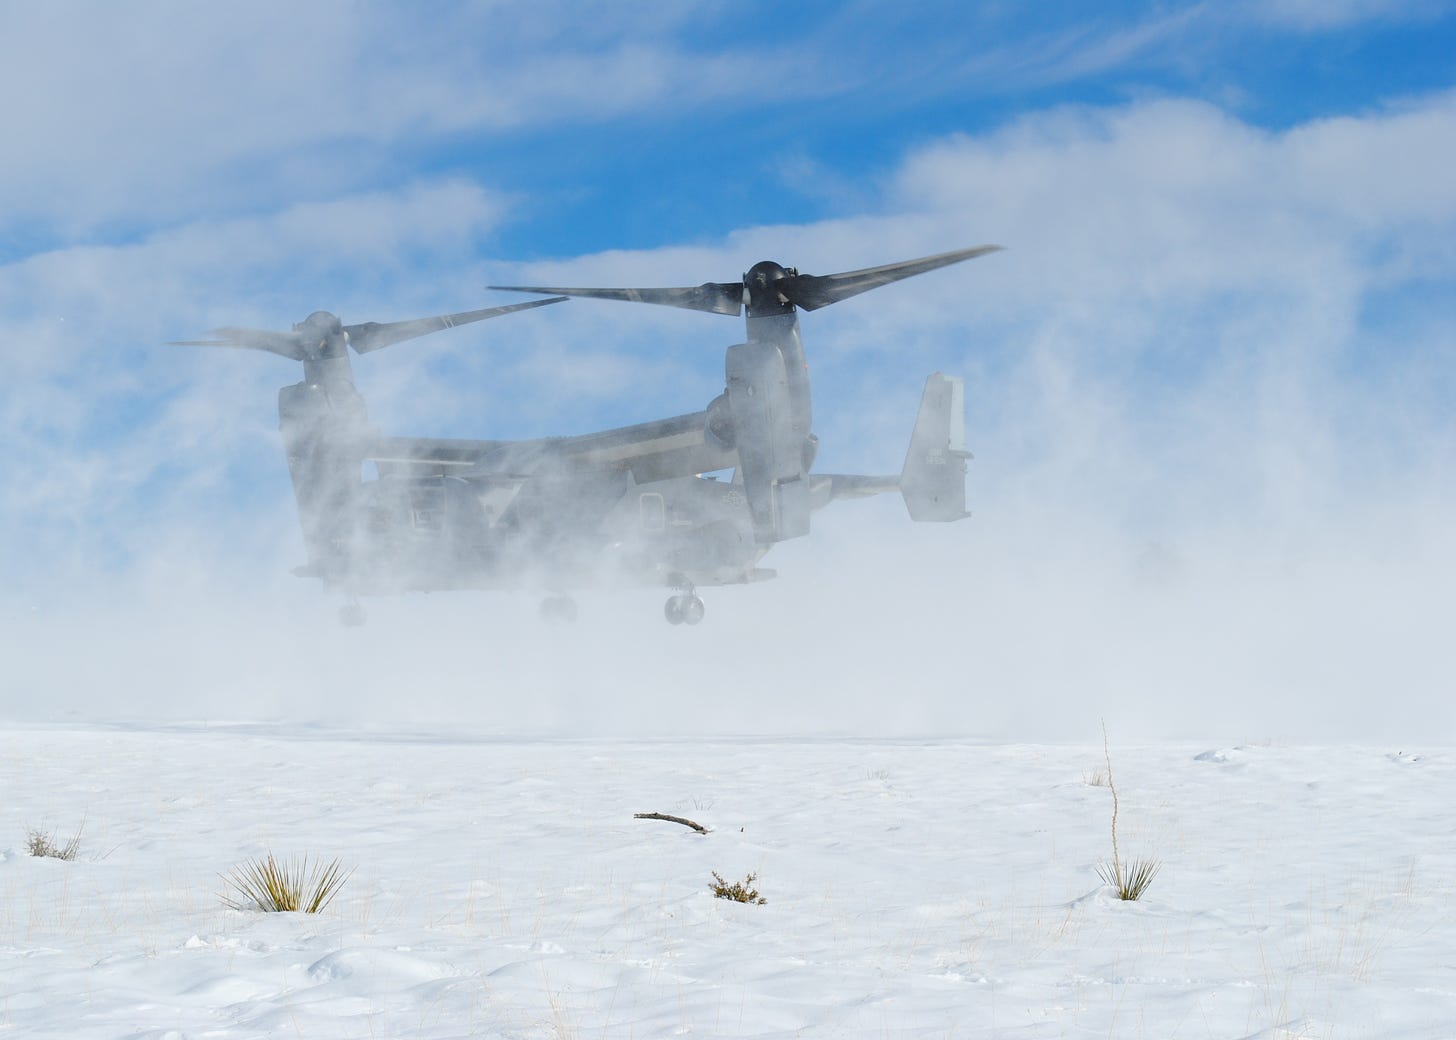 A CV-22 Osprey lands in the snow in the desert